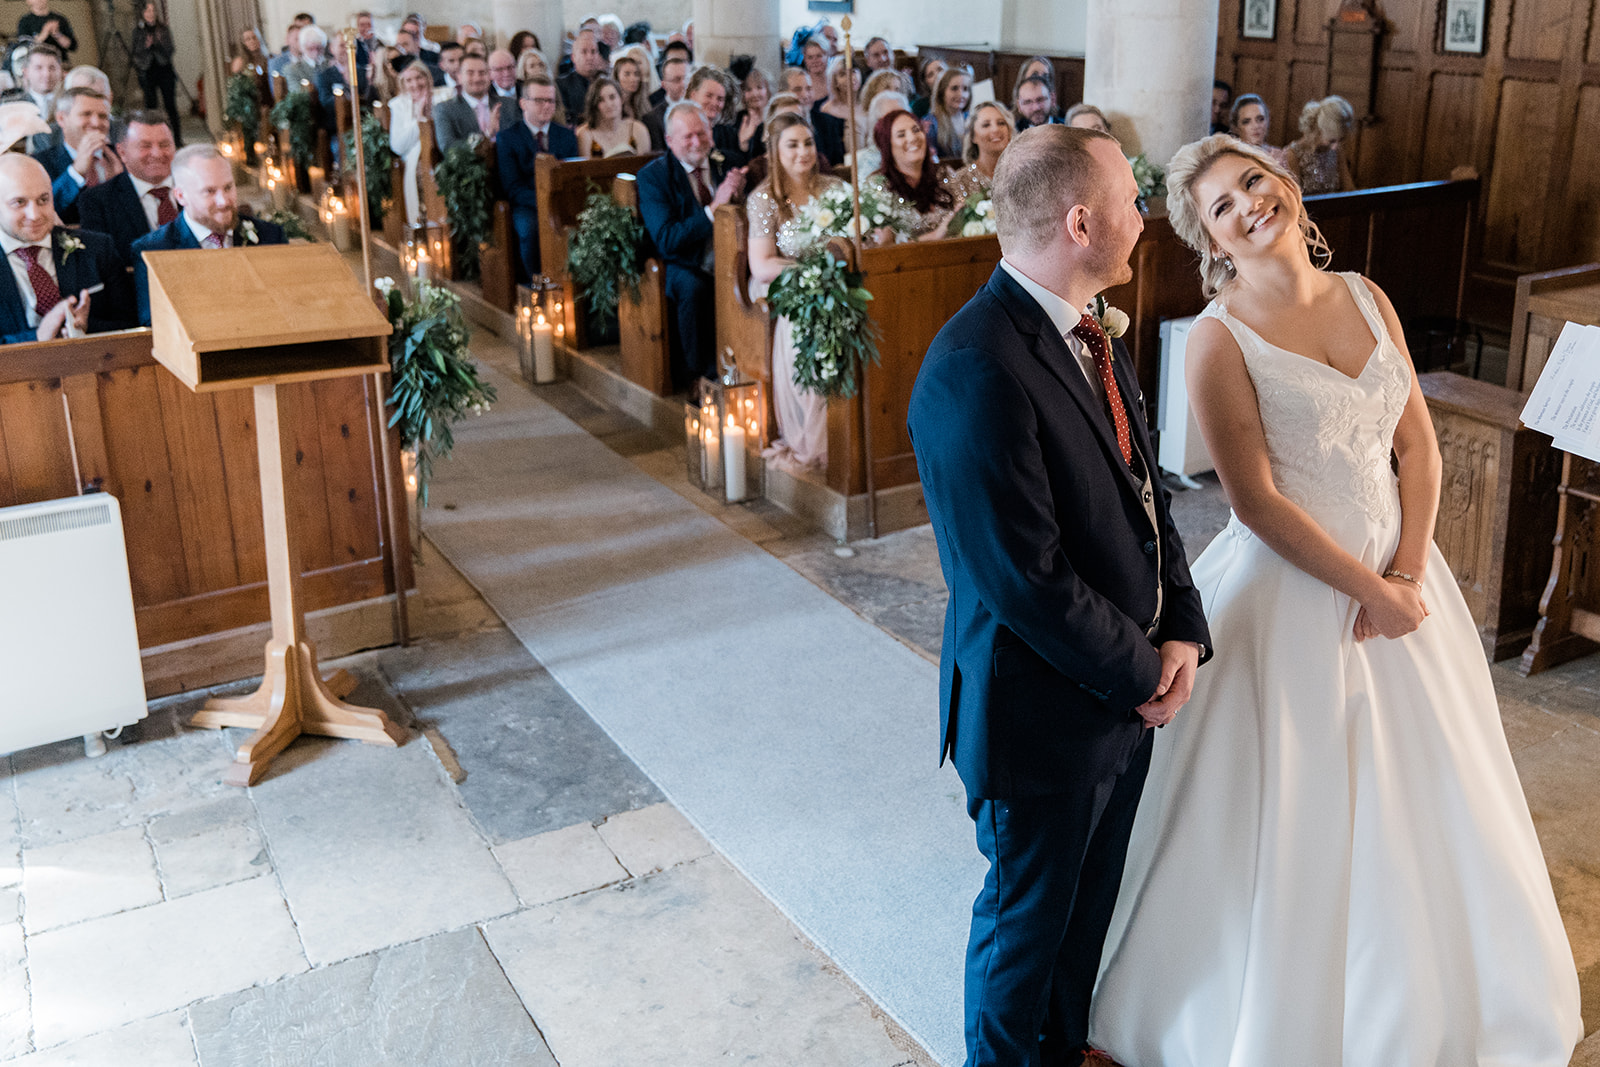 Lake District wedding photographer and videographer